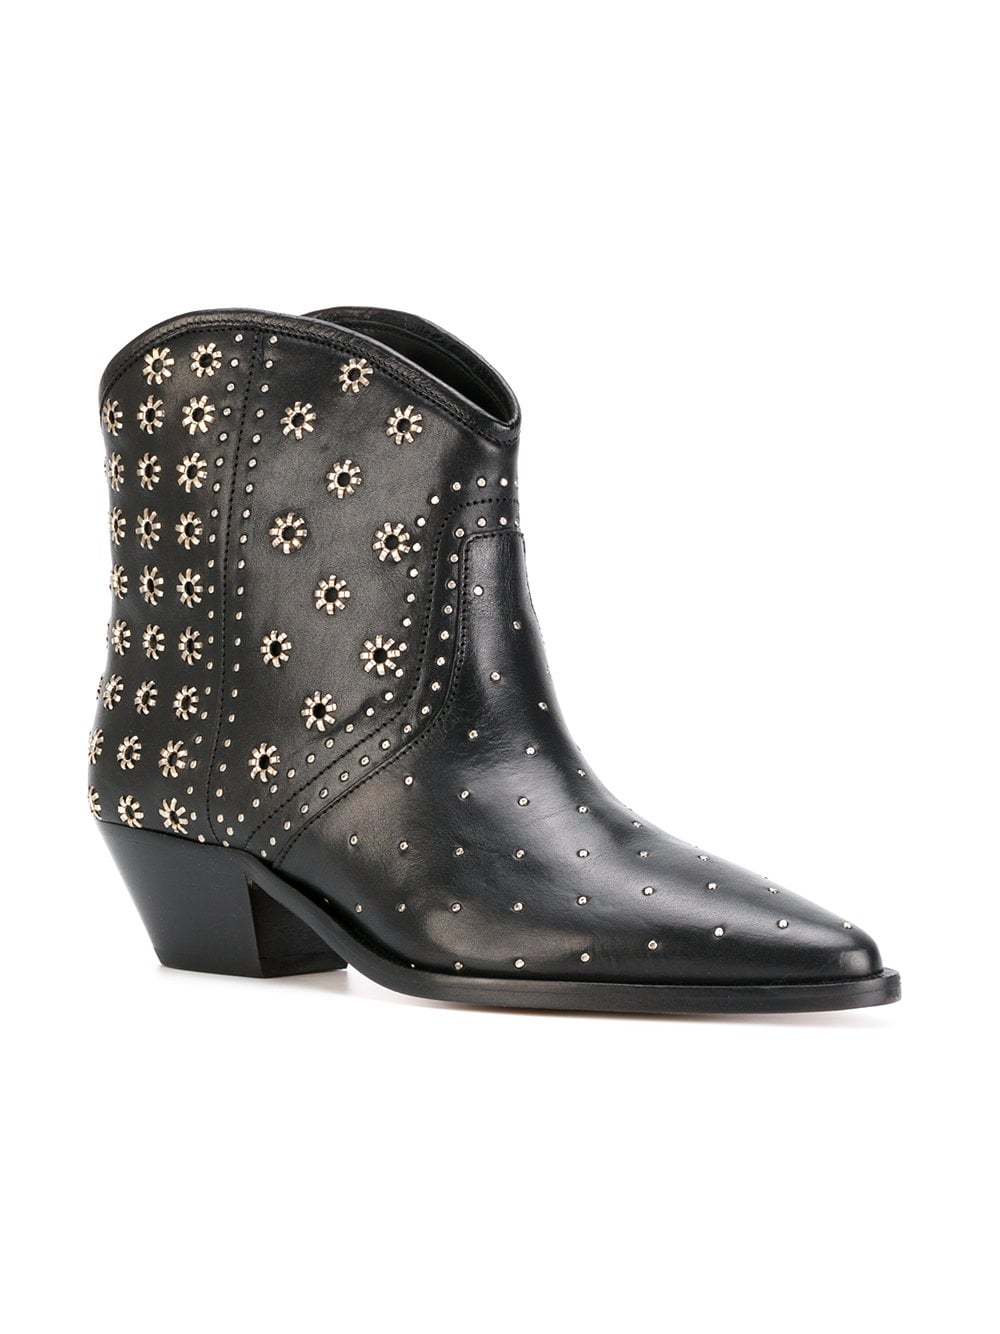 Marant Studded Domya Boots, $461 | farfetch.com Lookastic